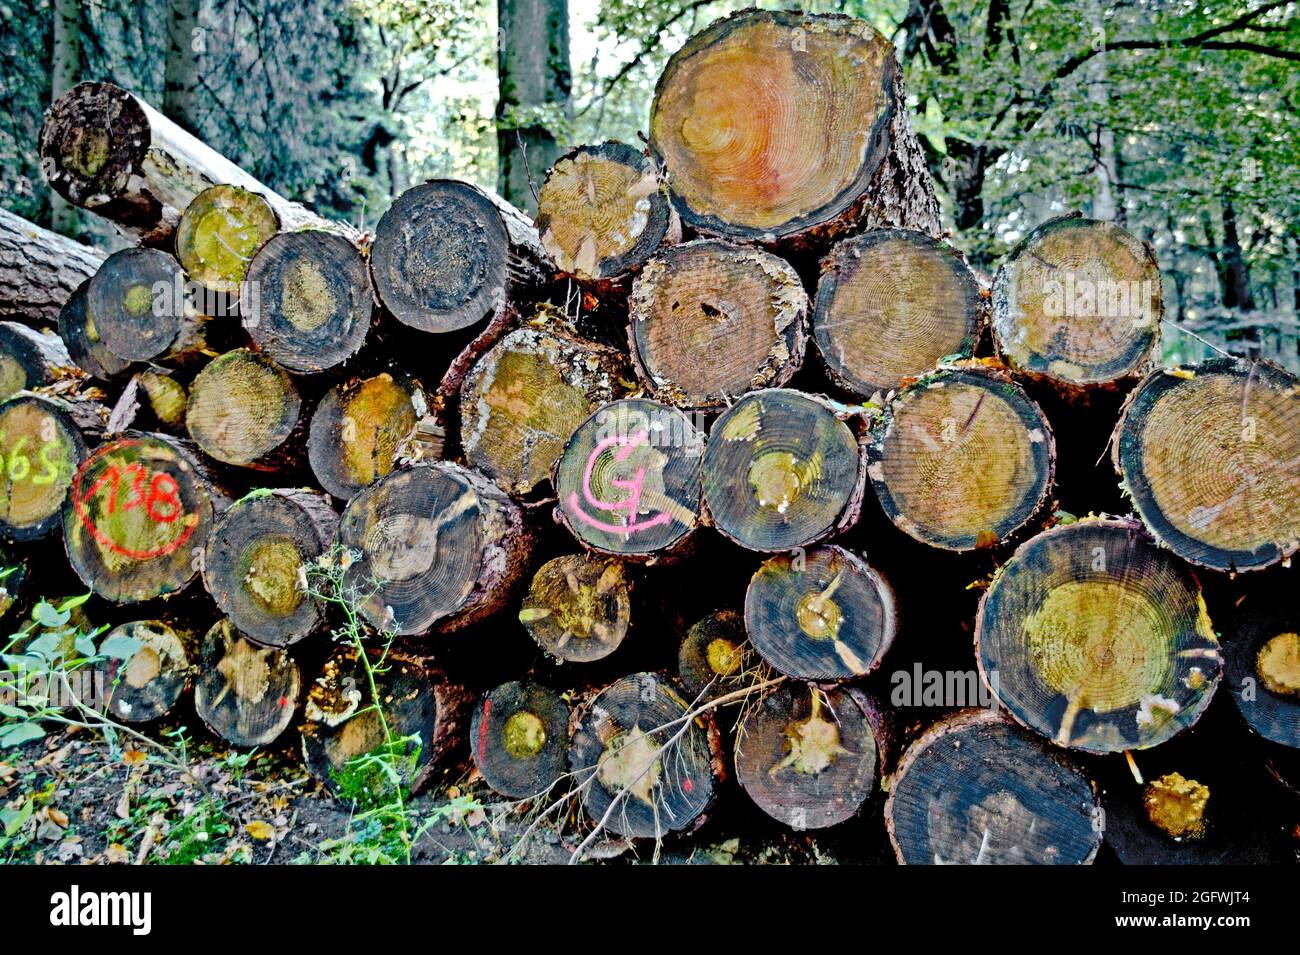 Pila de troncos; Stapel gefällter Baumstämme Foto de stock